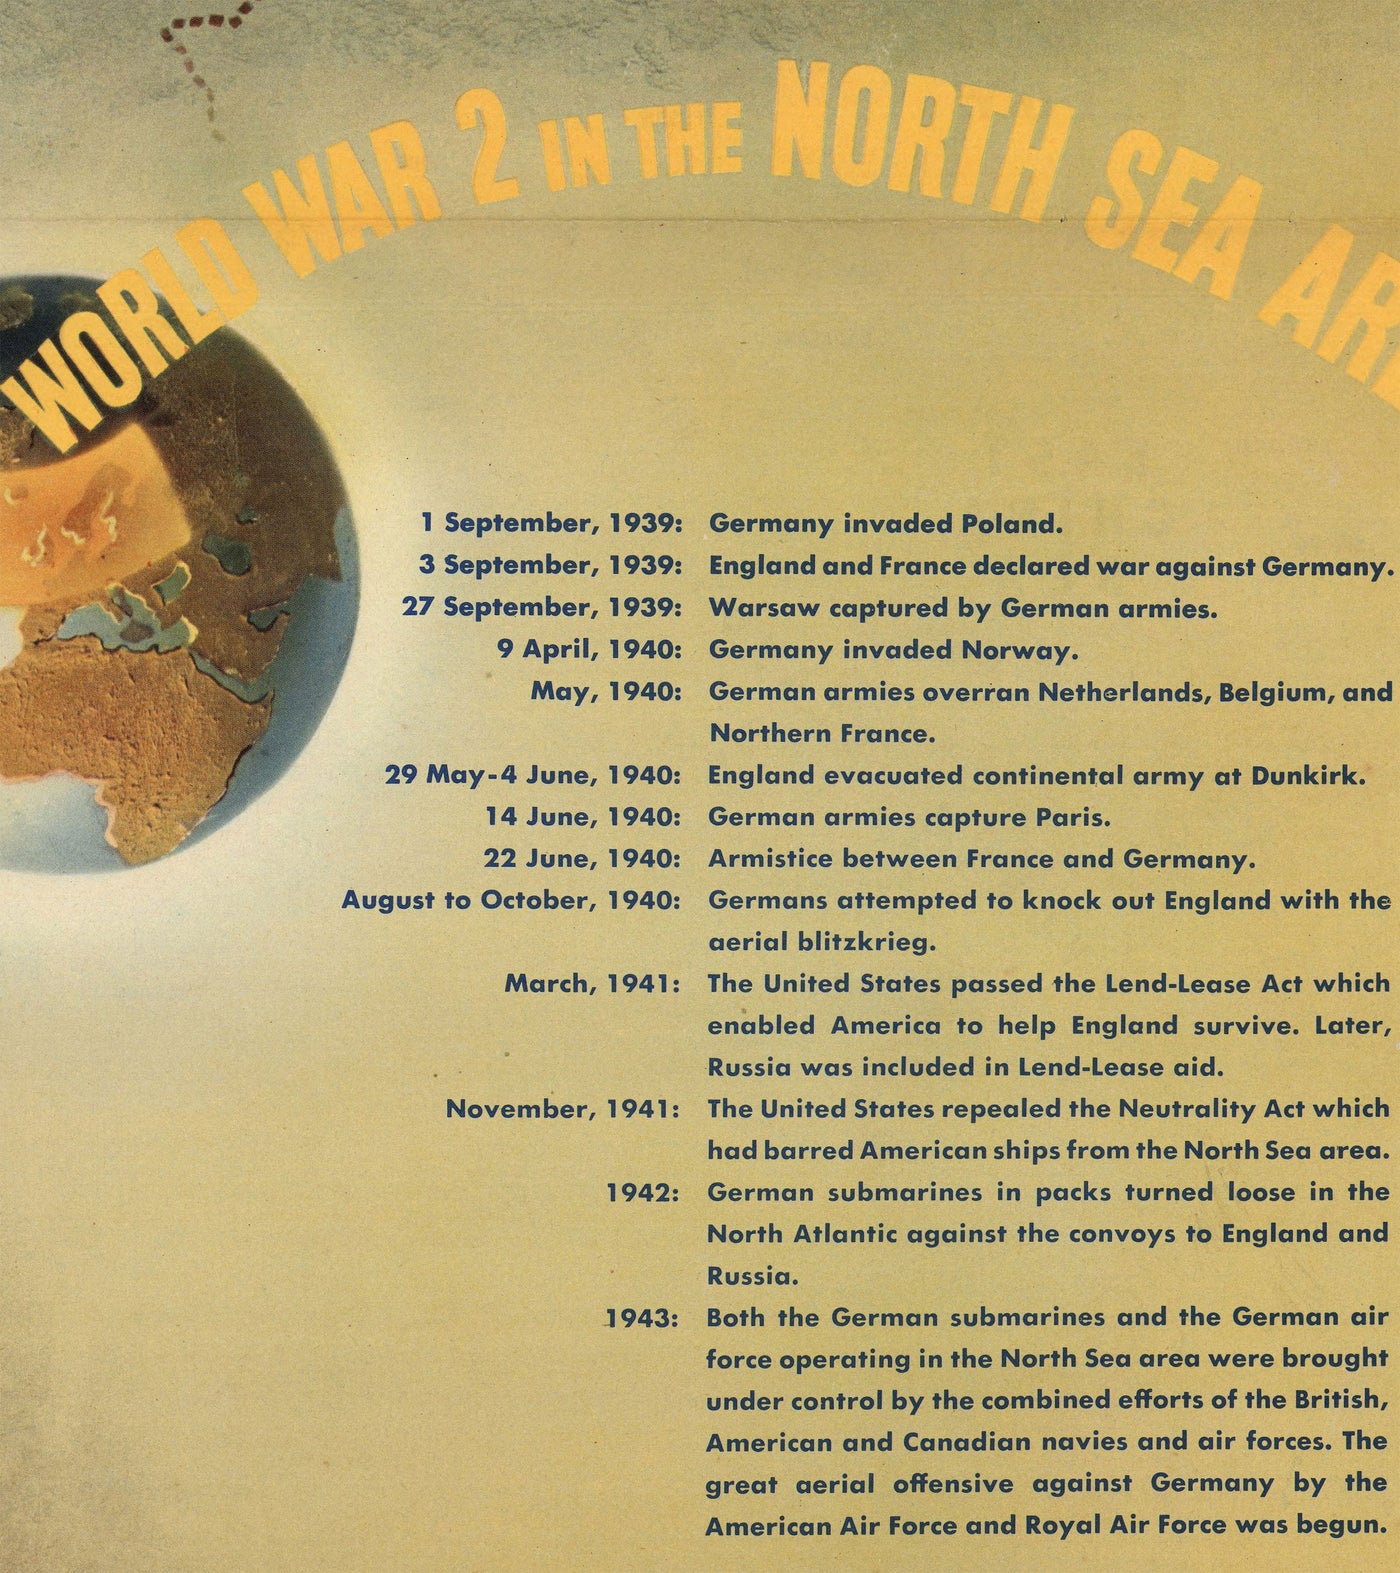 Navwarmap Nr. 3 - Alte Weltkrieg 2 Karte, 1944 - Westfront, Alliierte vs. Nazi - US Navy Educational & Propaganda Map